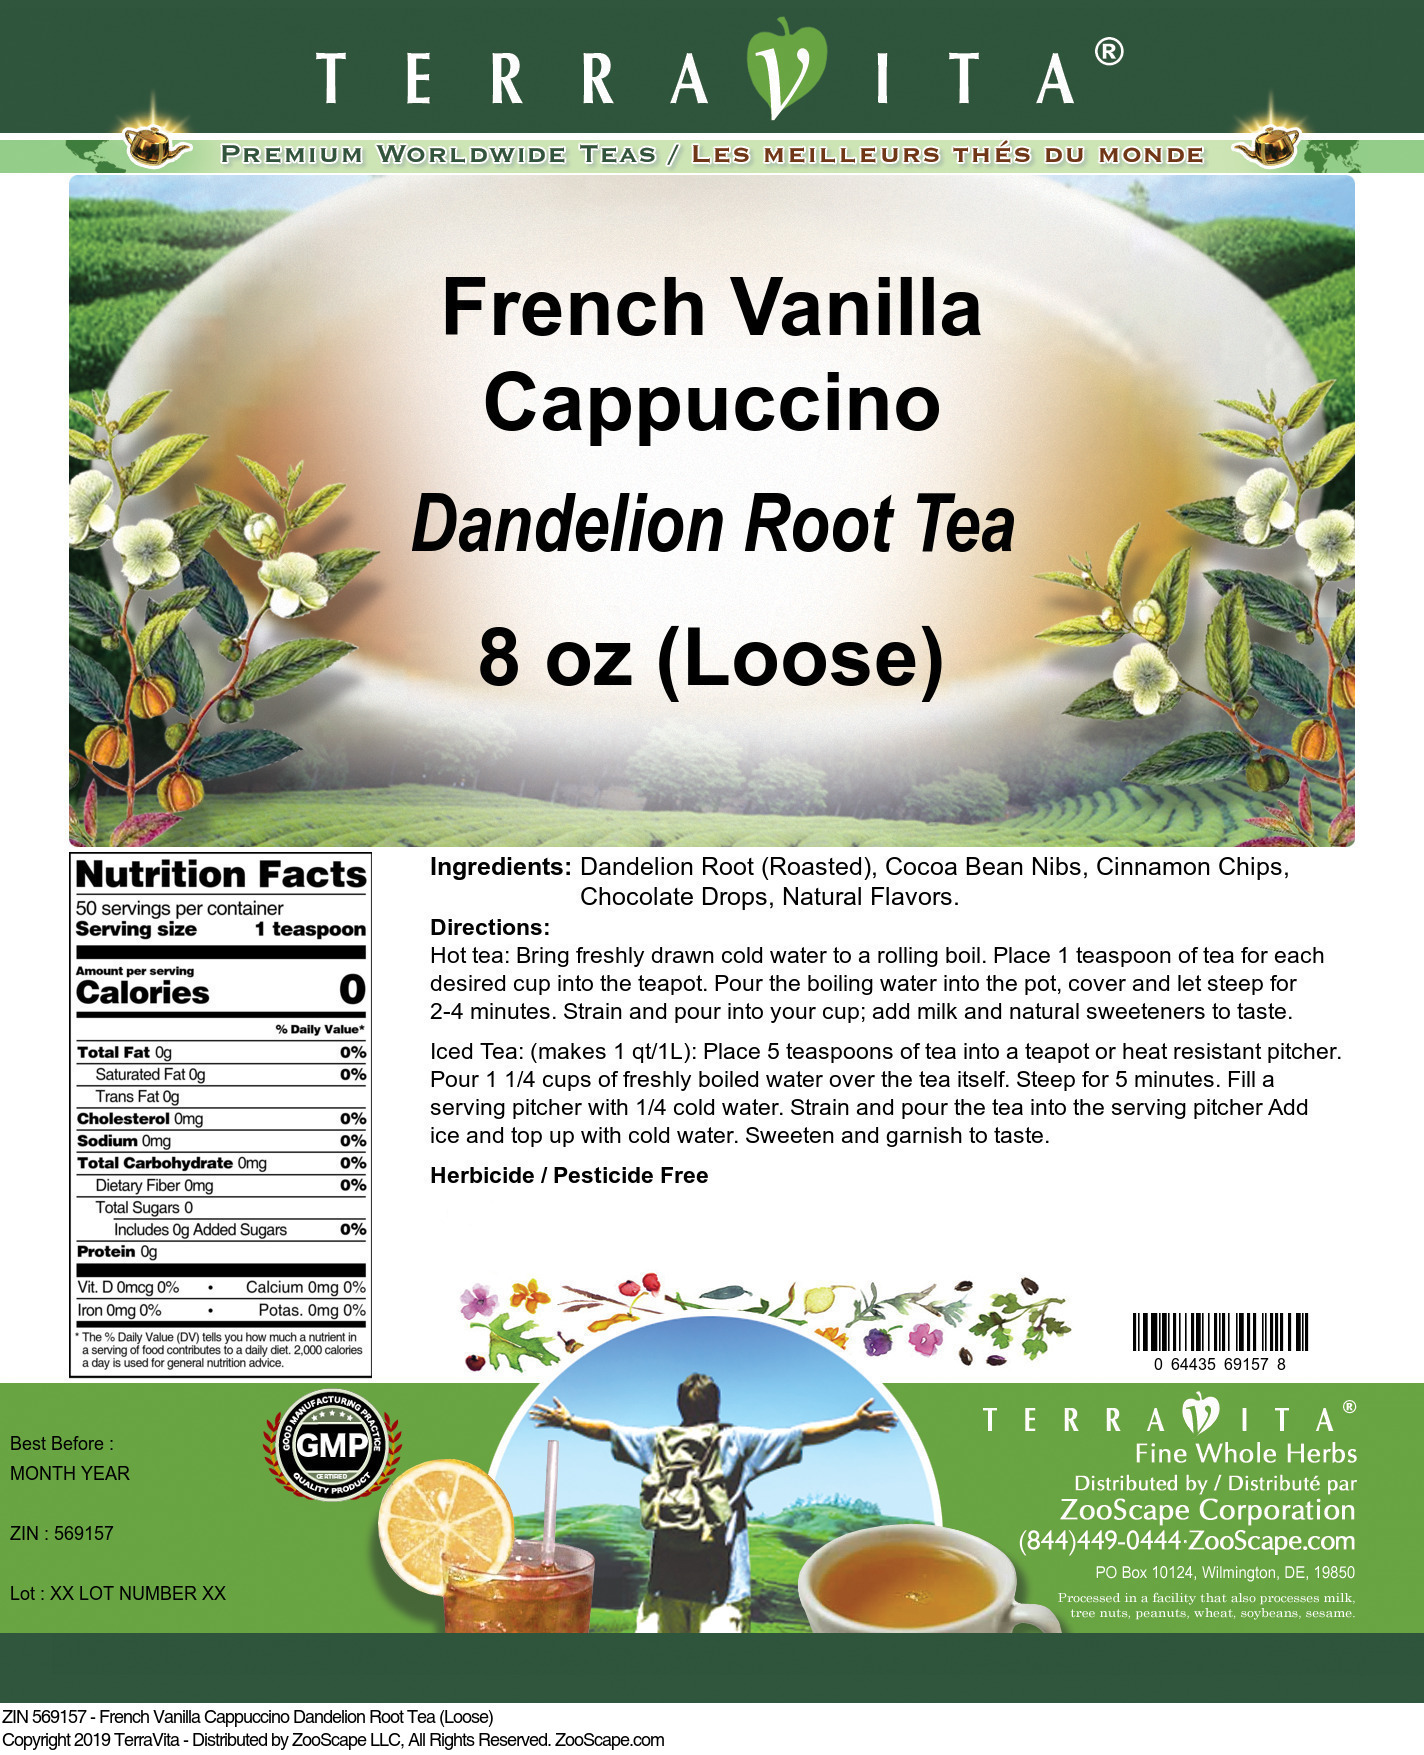 French Vanilla Cappuccino Dandelion Root Tea (Loose) - Label